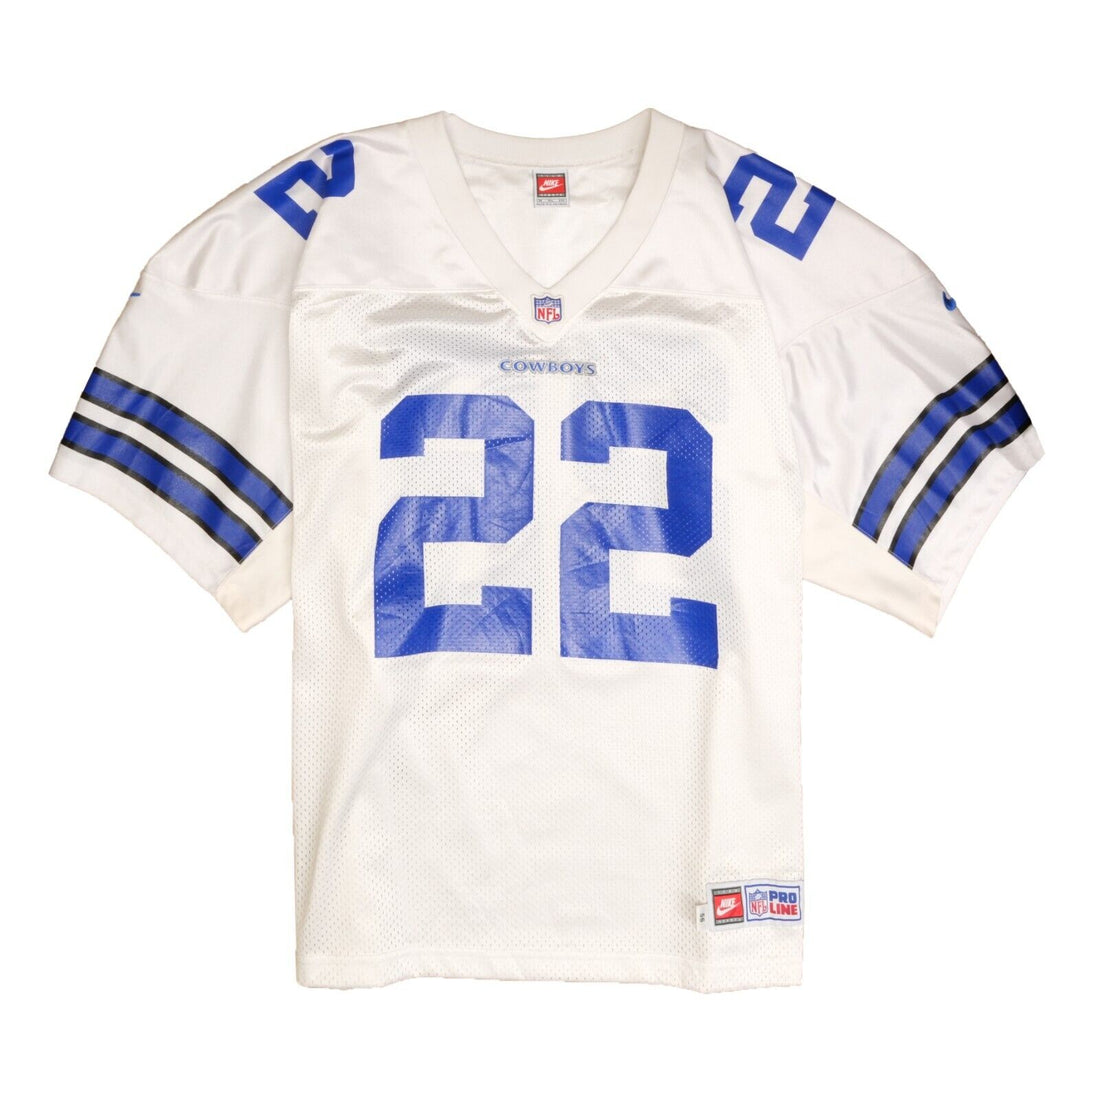 Deion Sanders Dallas Cowboys Nike home jersey men sz 2XL vintage NFL white